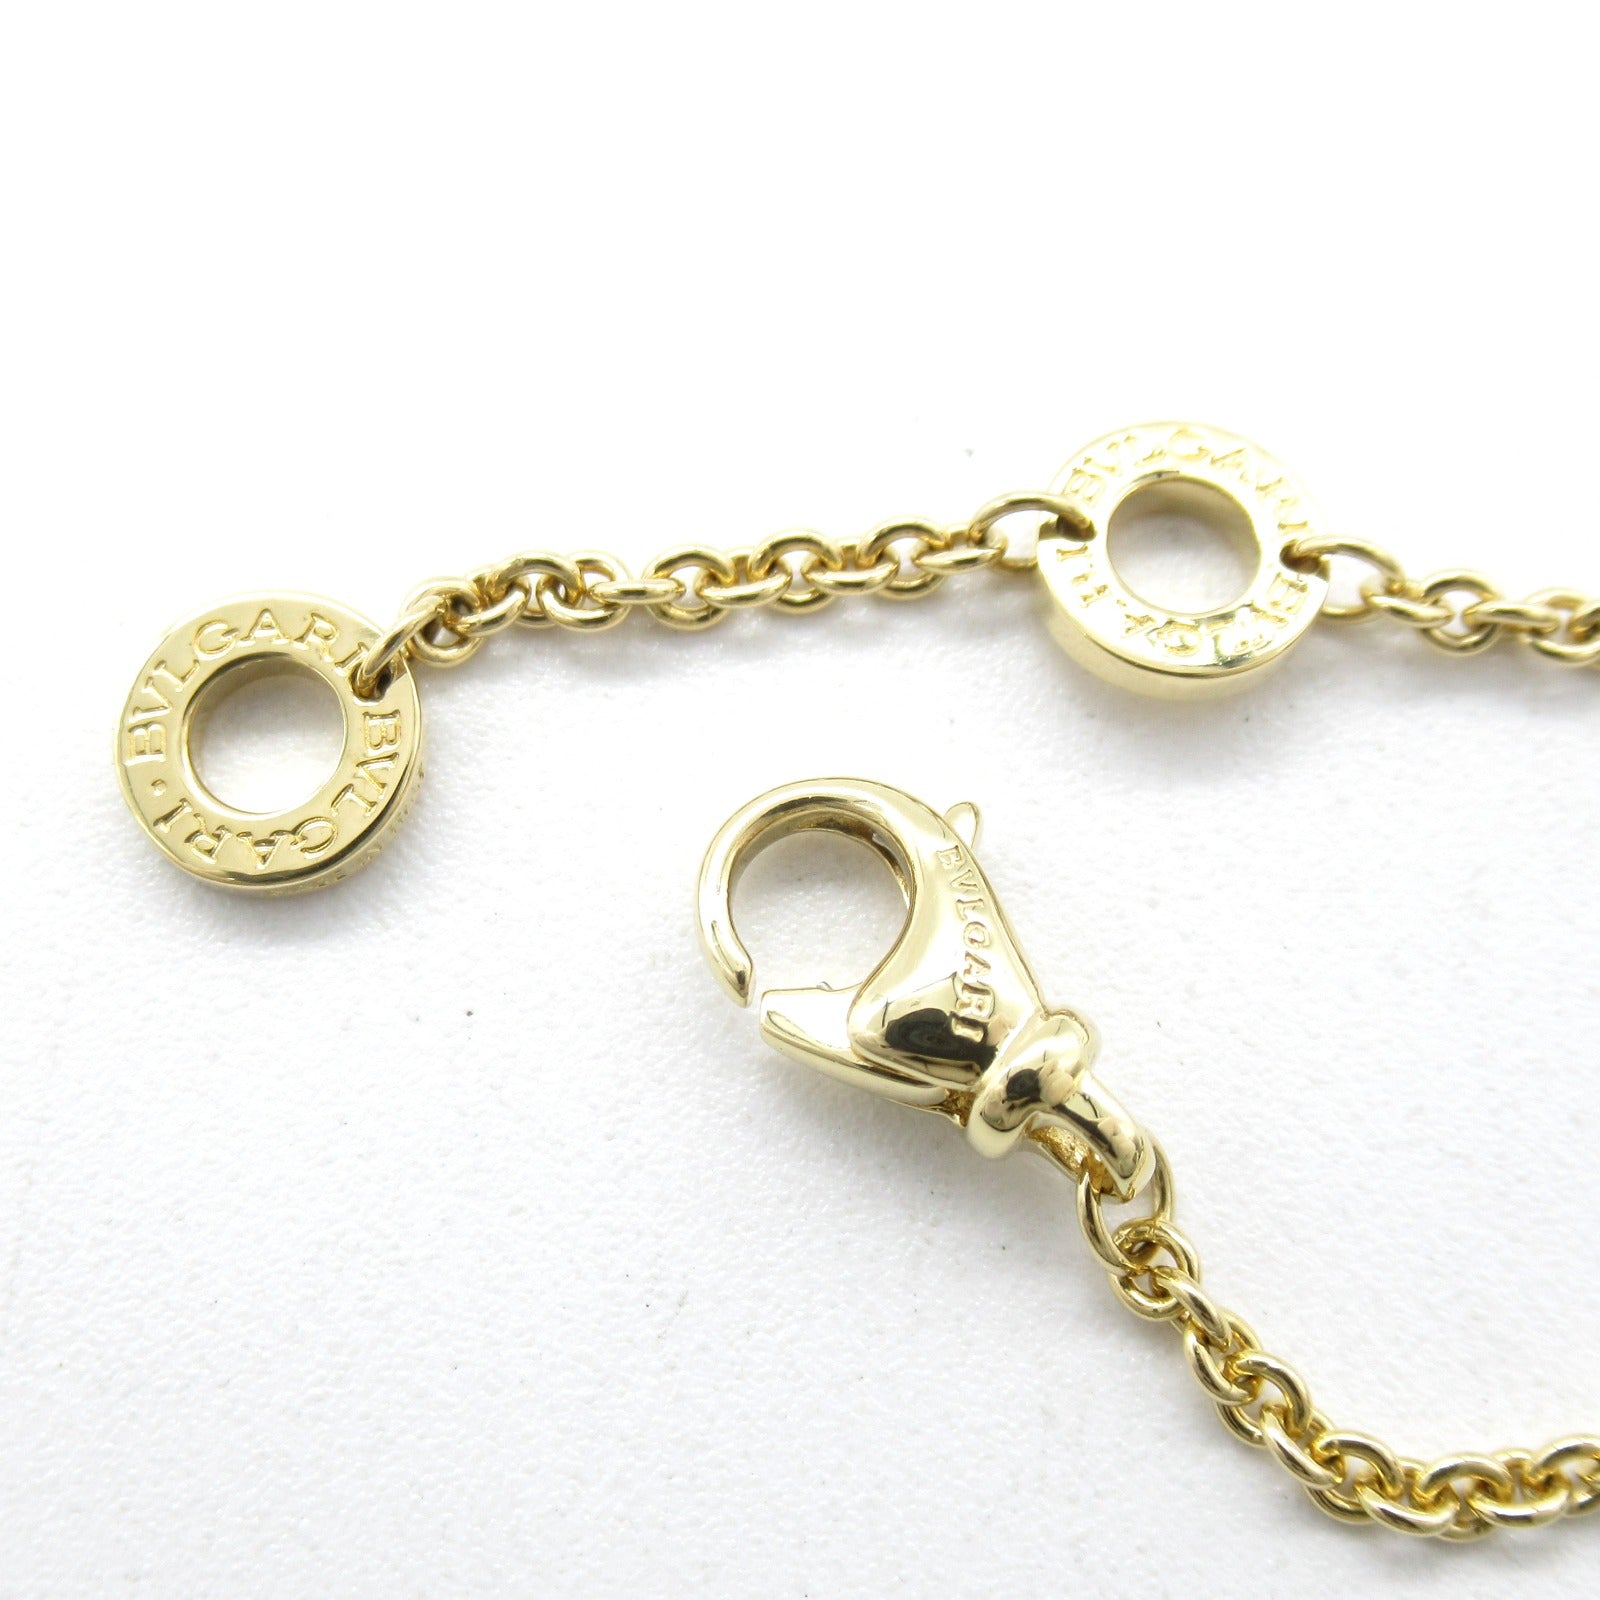 Bulgari BVLGARI B-zero1 Beezero One Element Bracelet Bracelet Accessories K18 (yellow g) K18WG (white gold) K18PG (pink gold ladies gold)